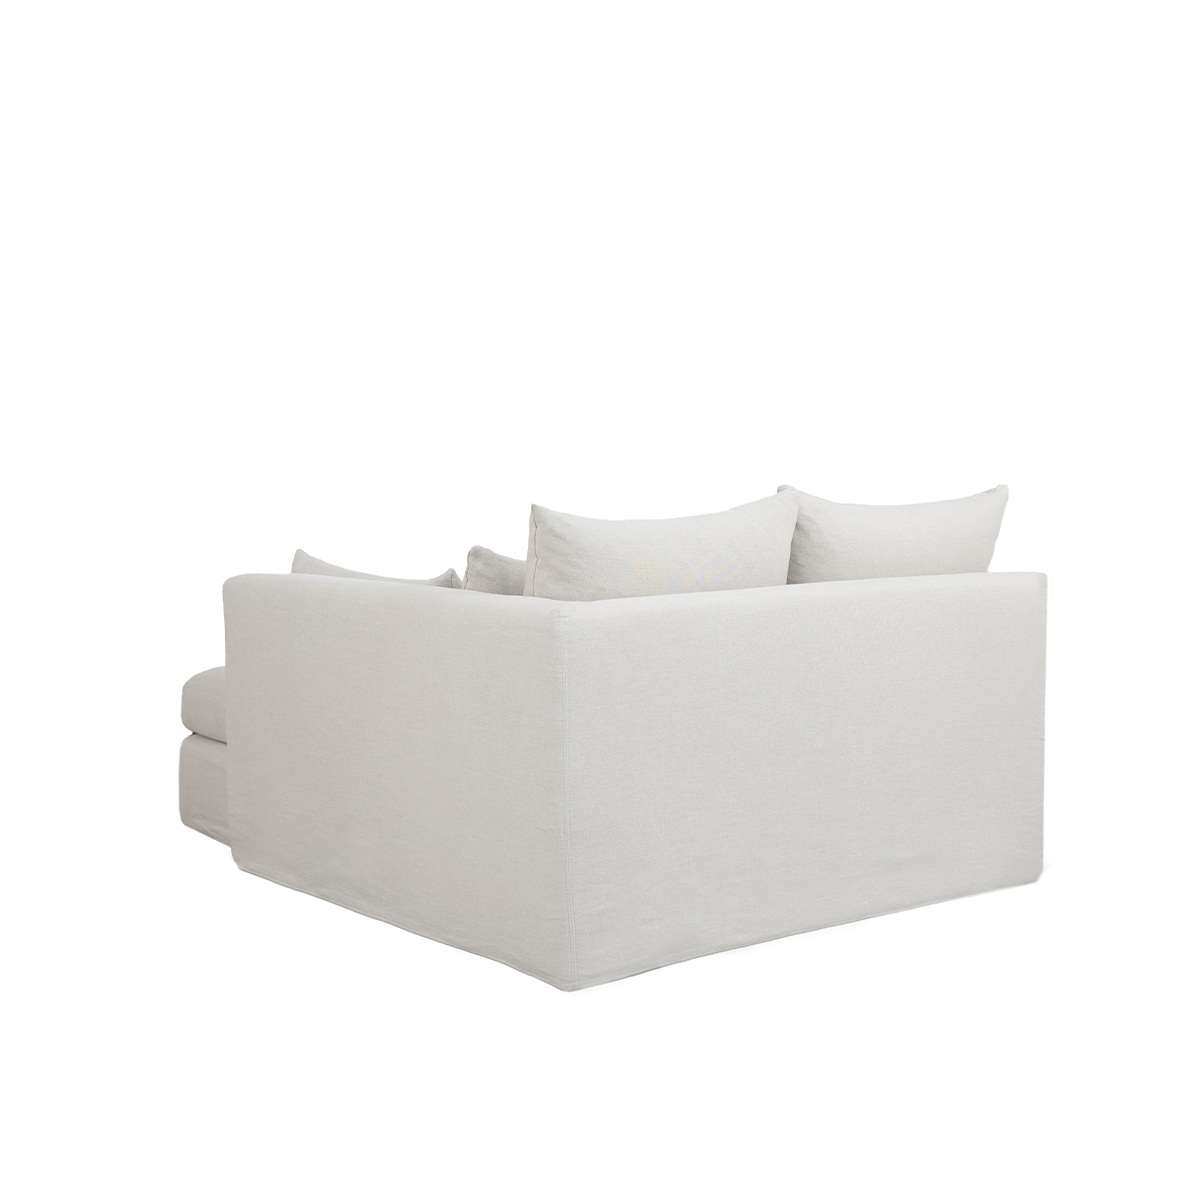 SuperBox sofa - Right armrest, L51 x D71 x H34 in - Cotton - image 4